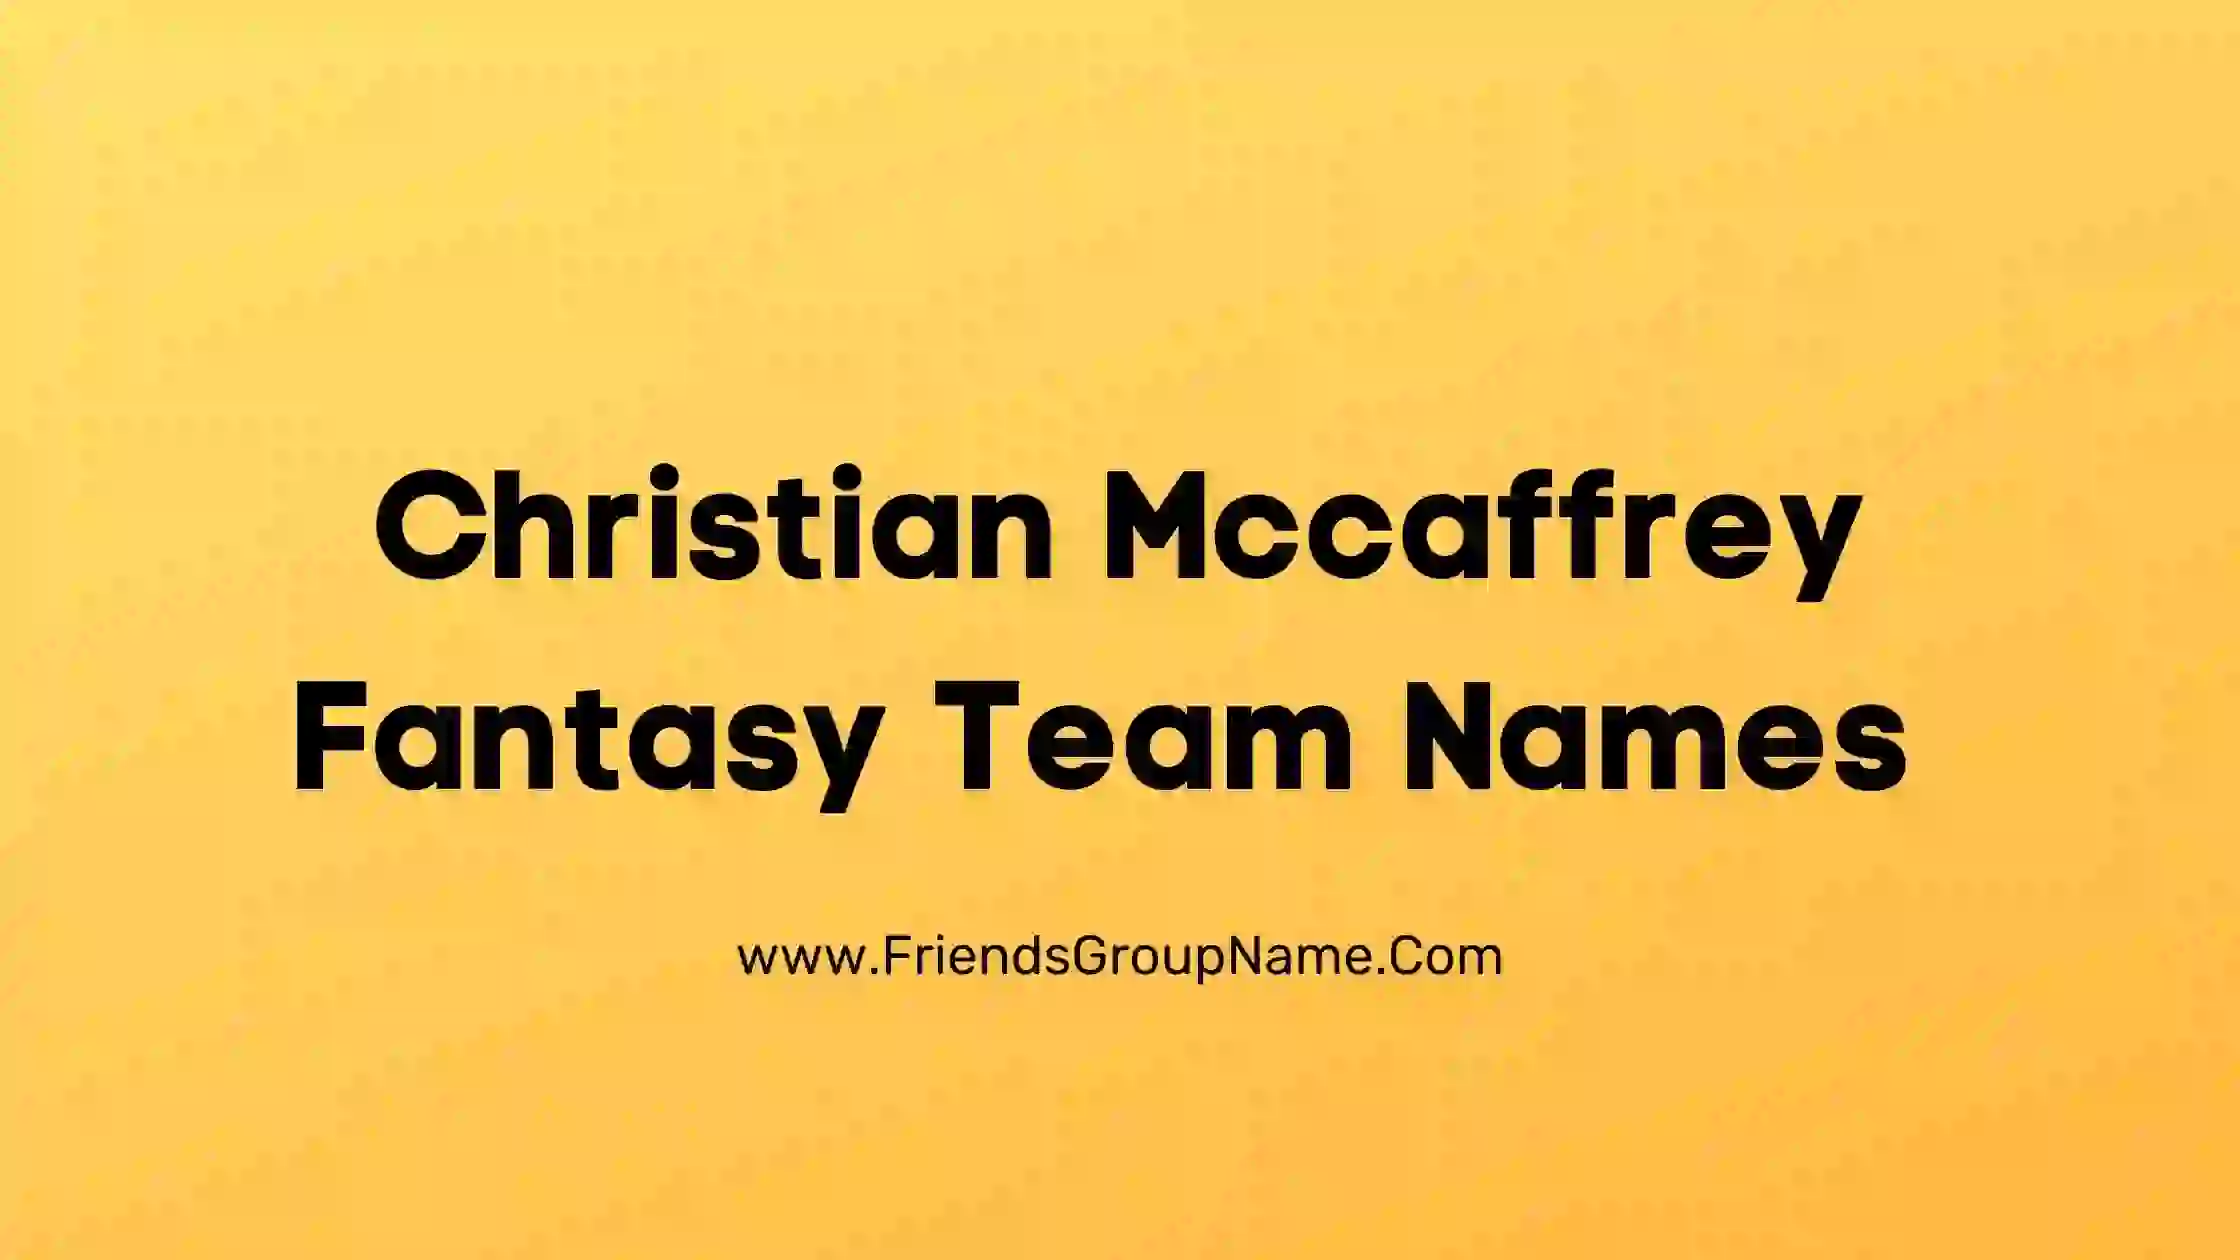 Christian Mccaffrey Fantasy Team Names